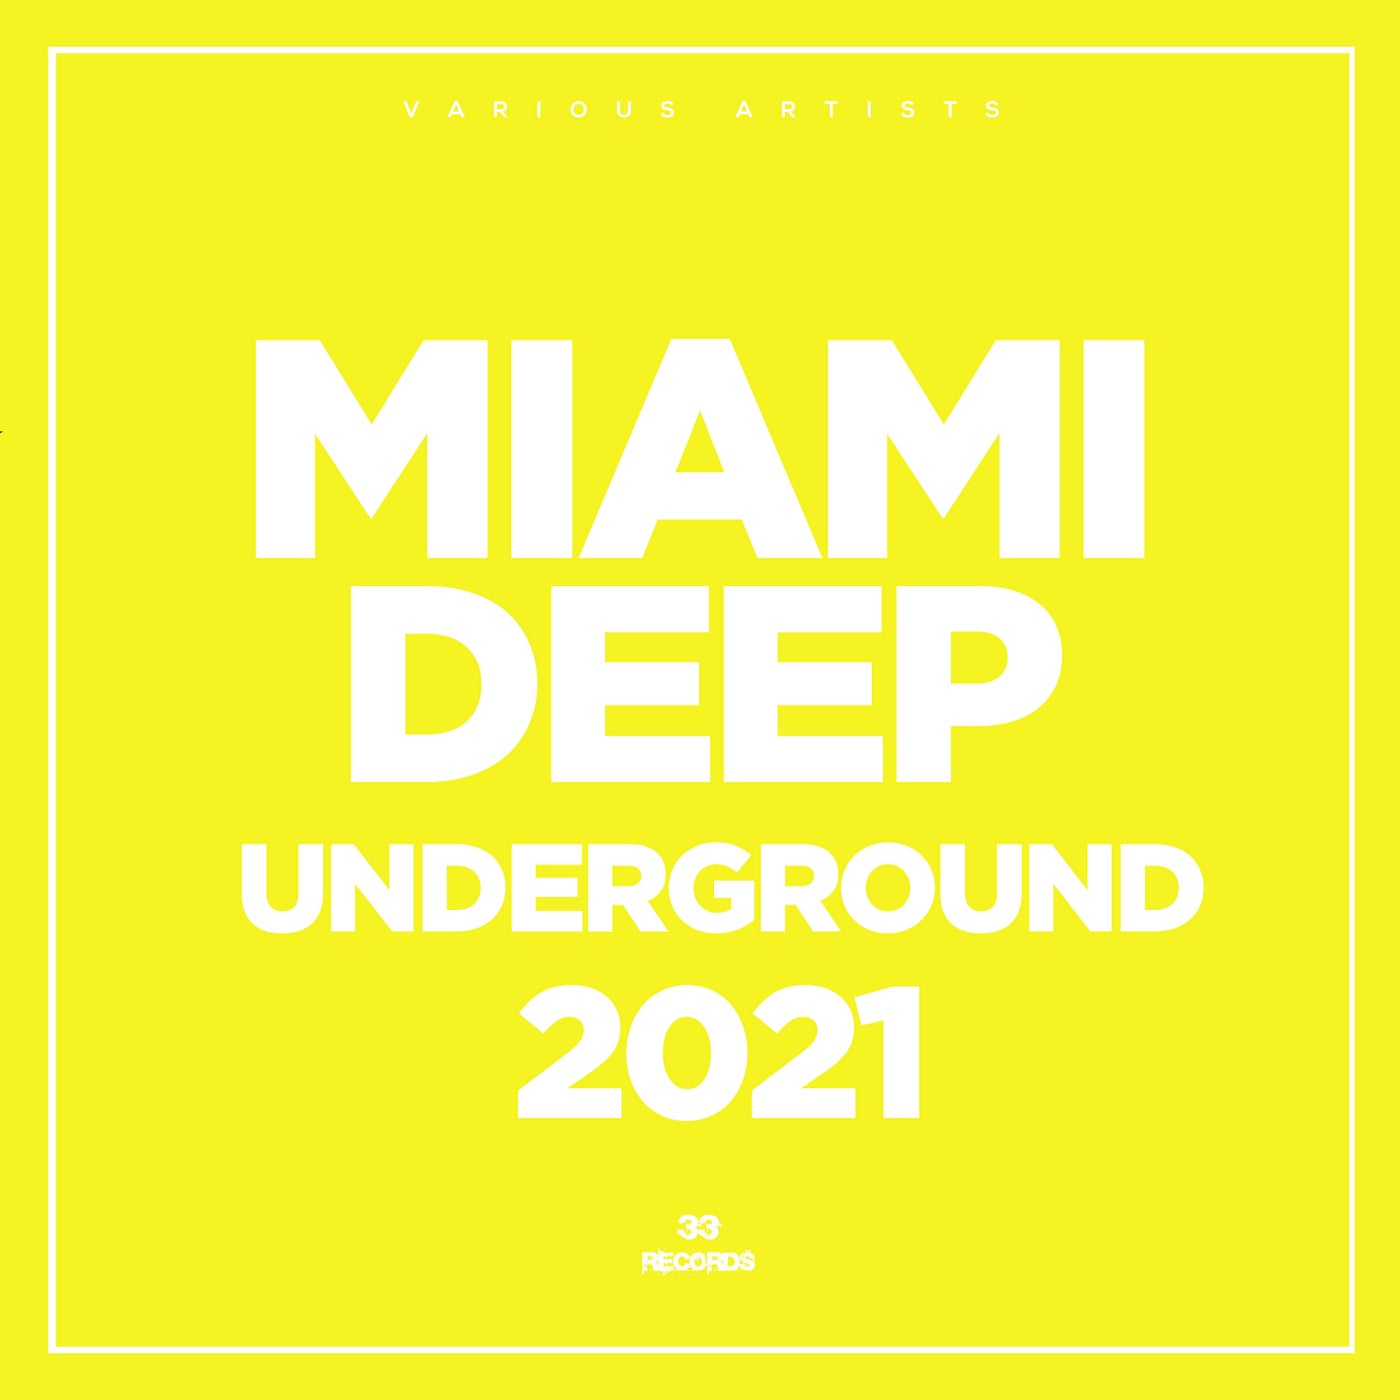 Miami Deep Underground 2021